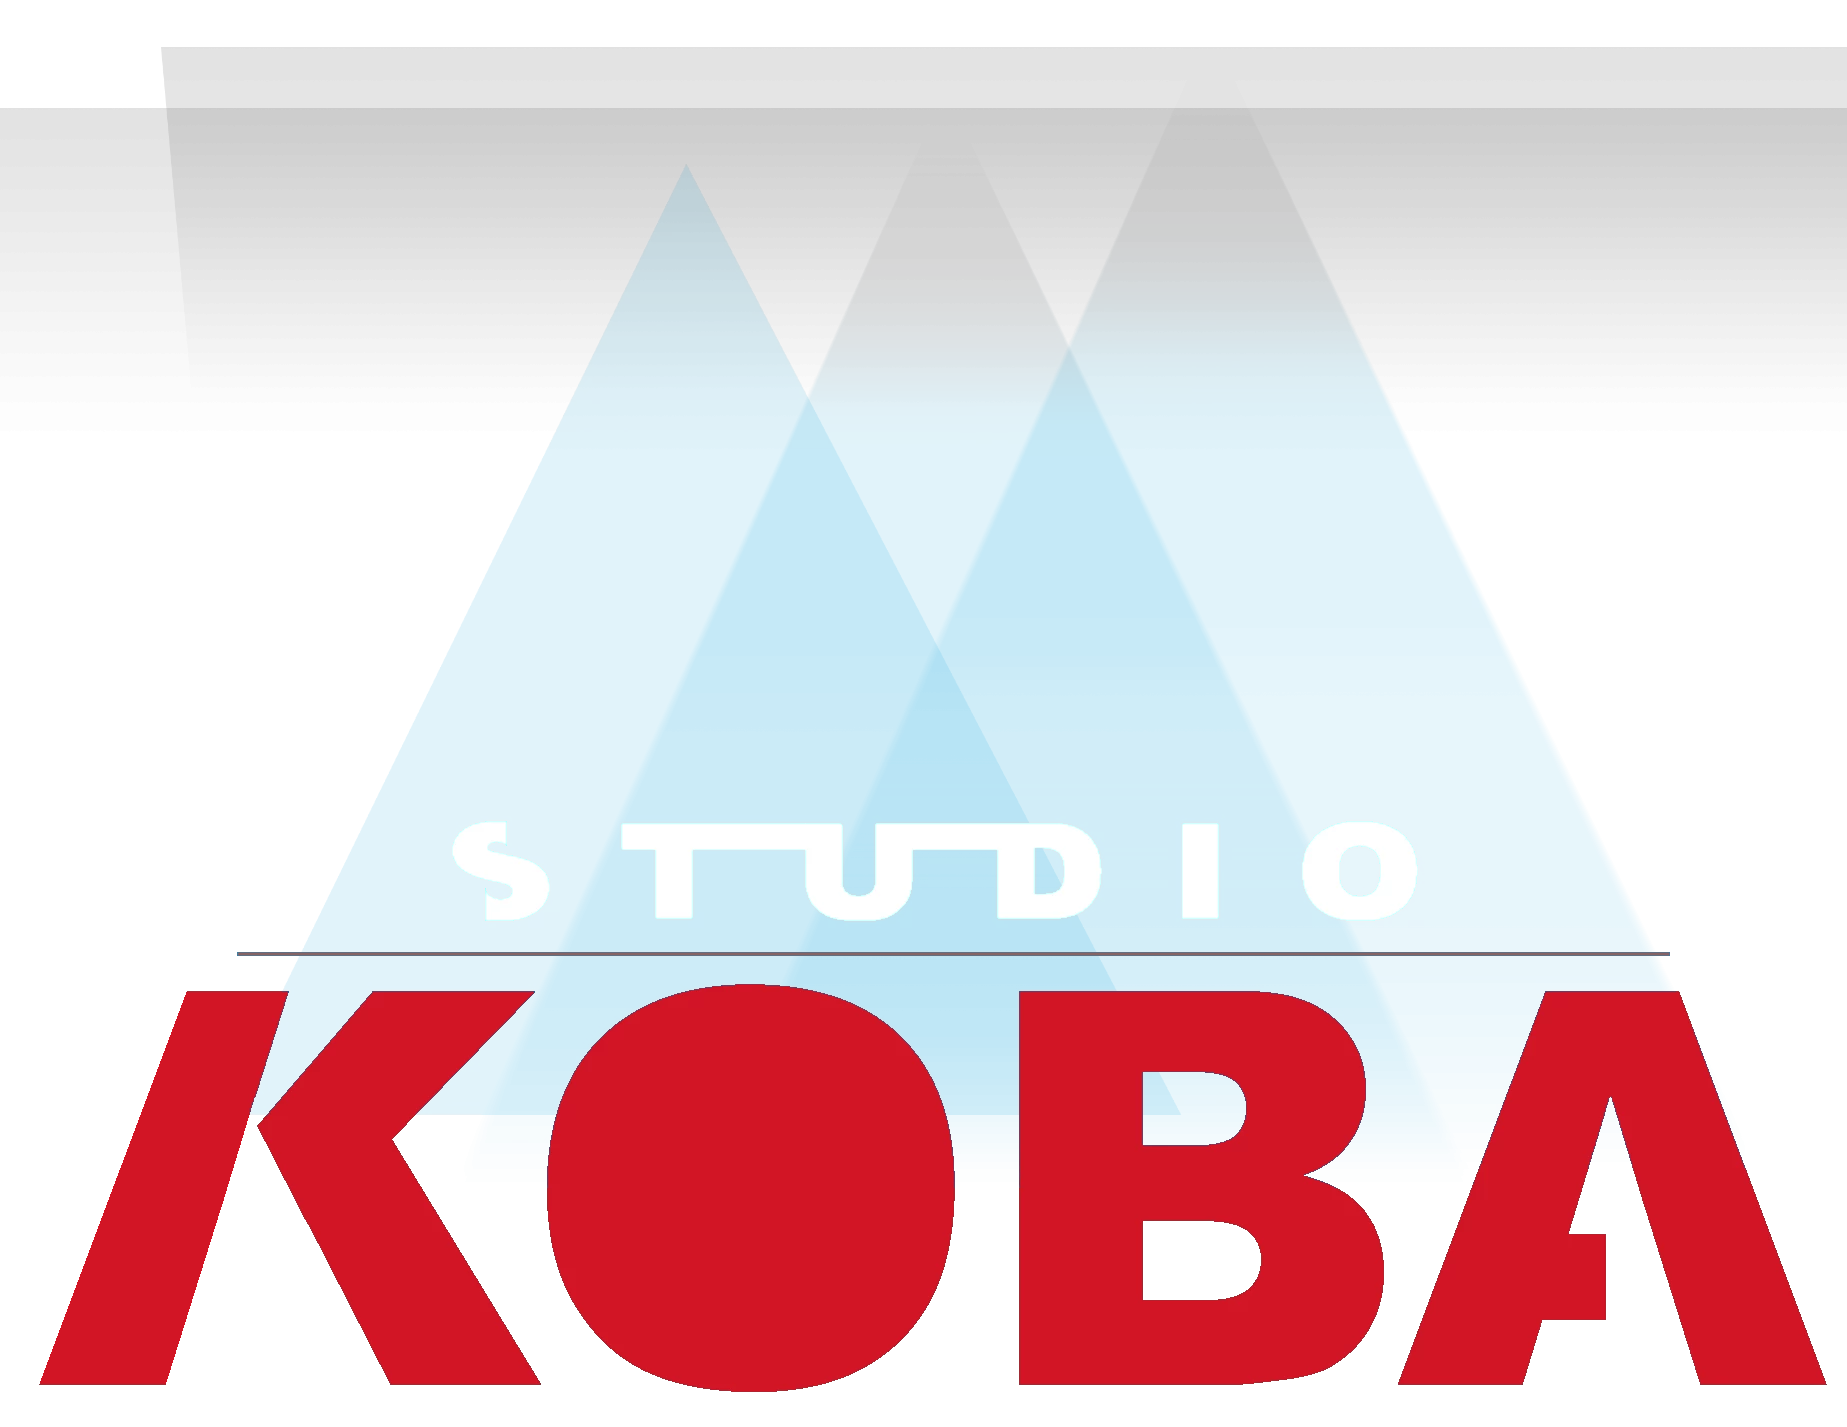 Studio Koba developer logo